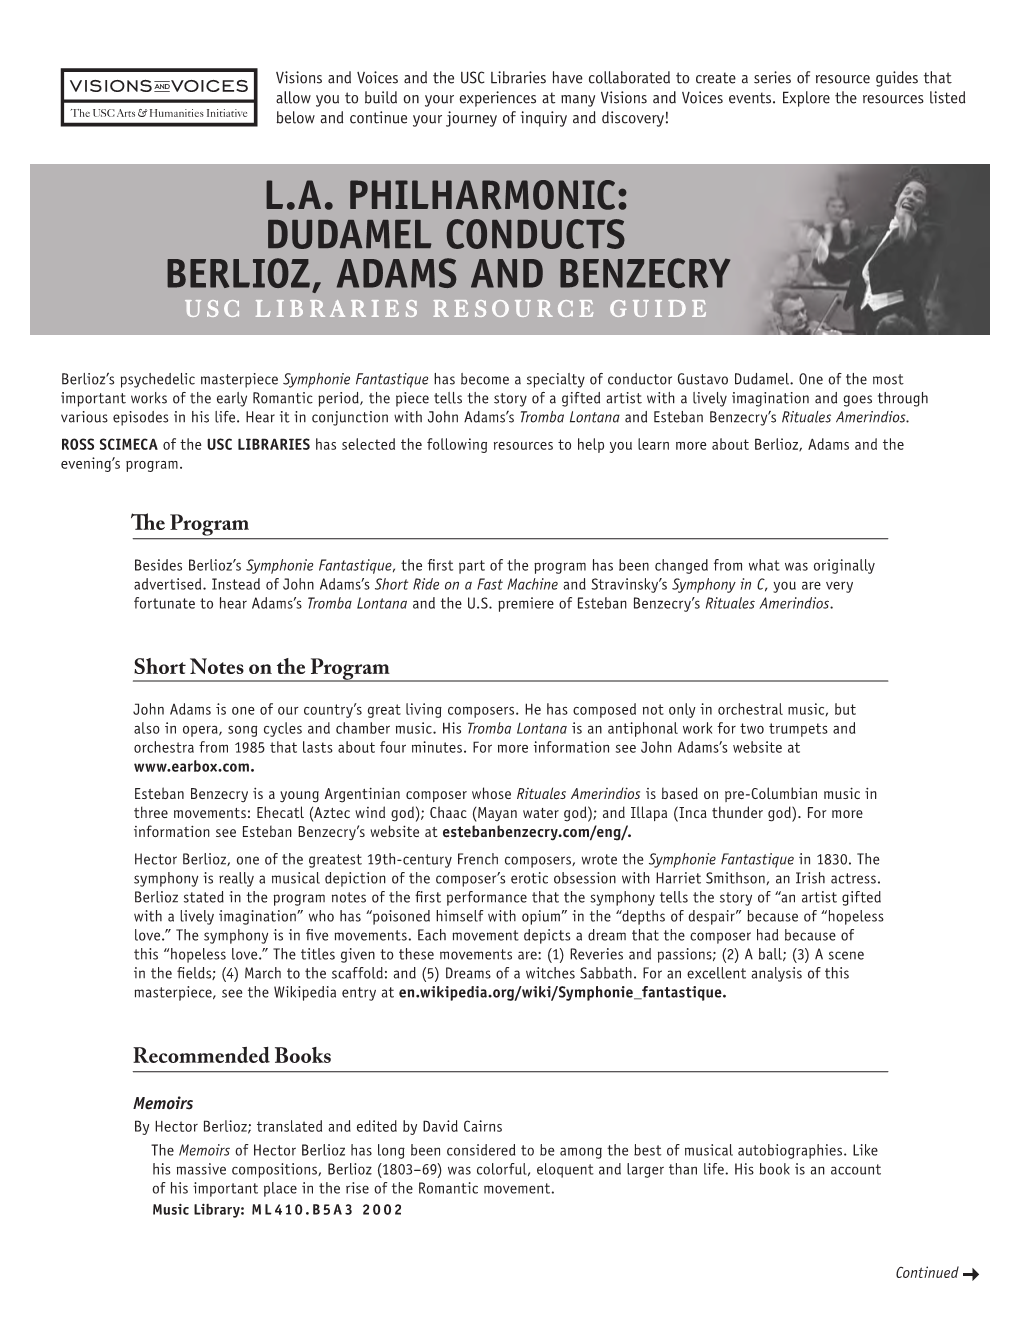 LA Philharmonic: Dudamel Conducts Stravinsky, Berlioz